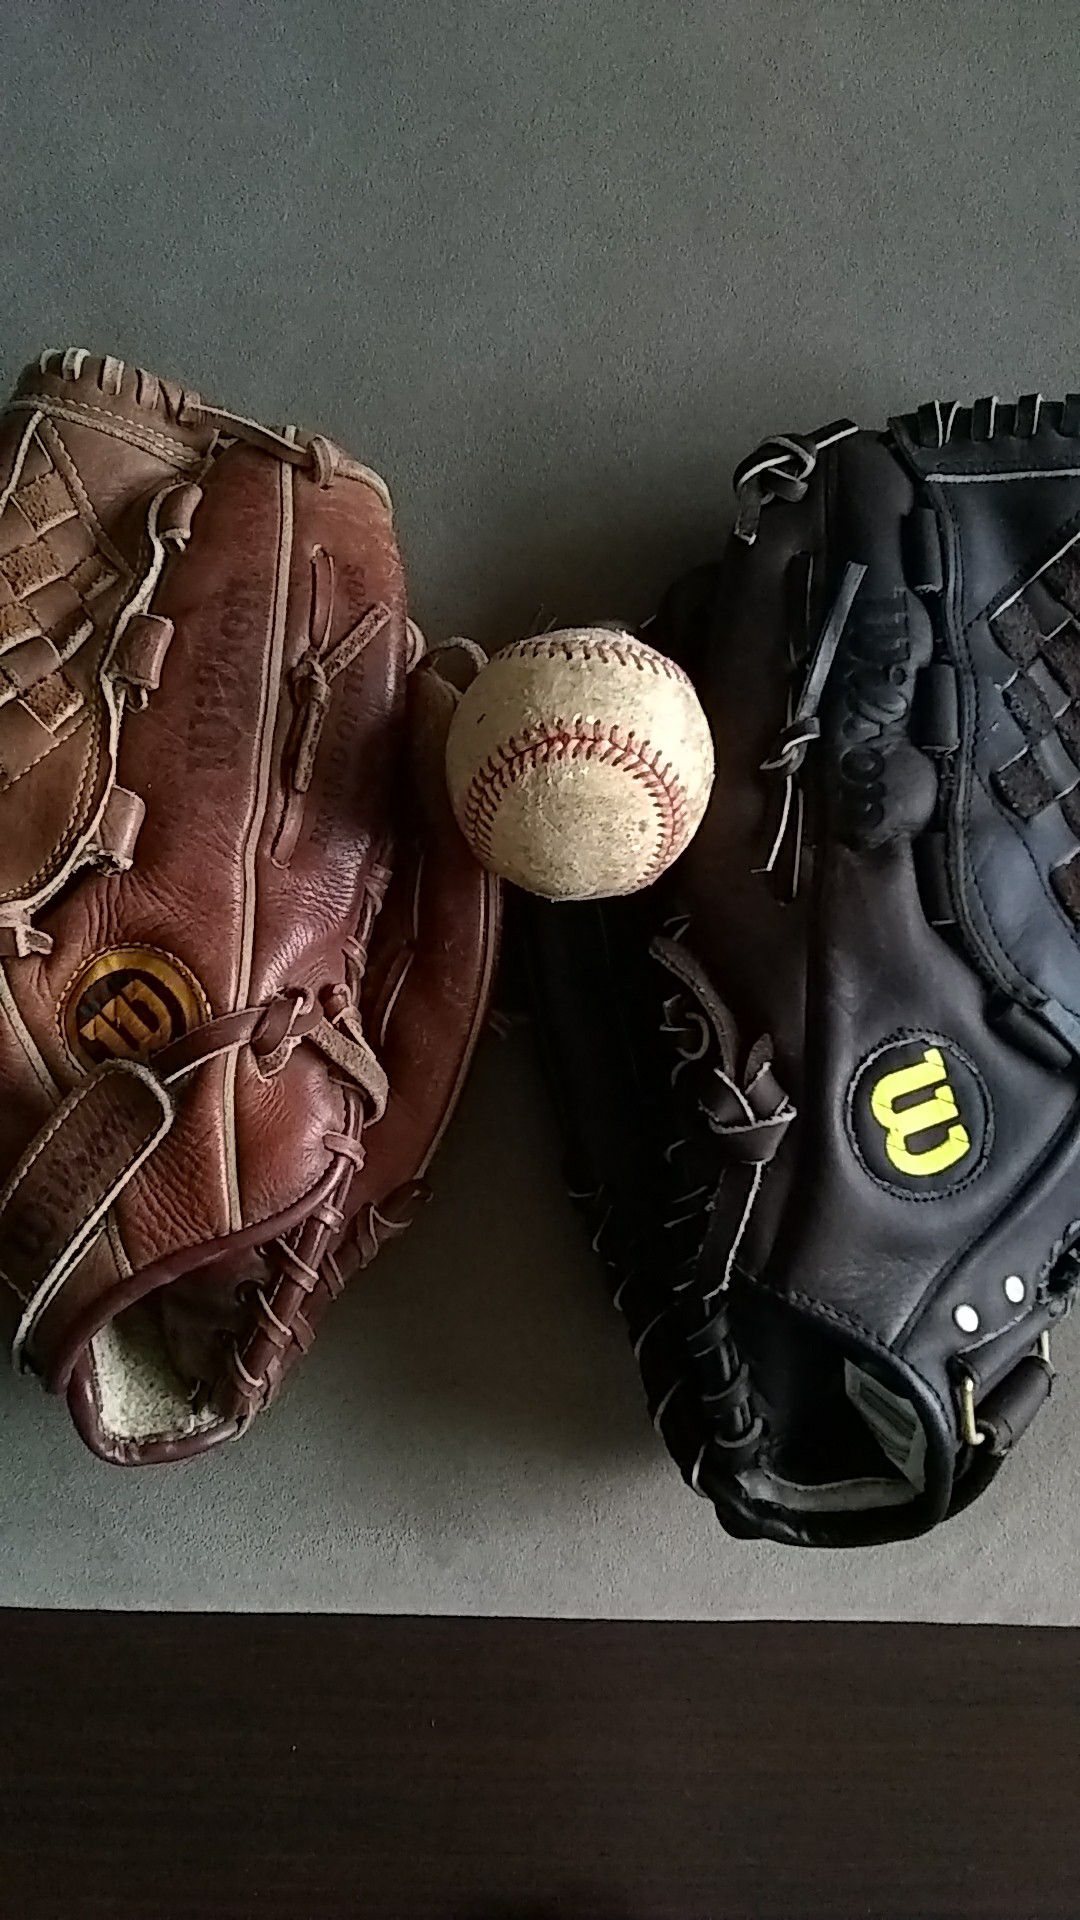 Baseball glove, wilson mitt